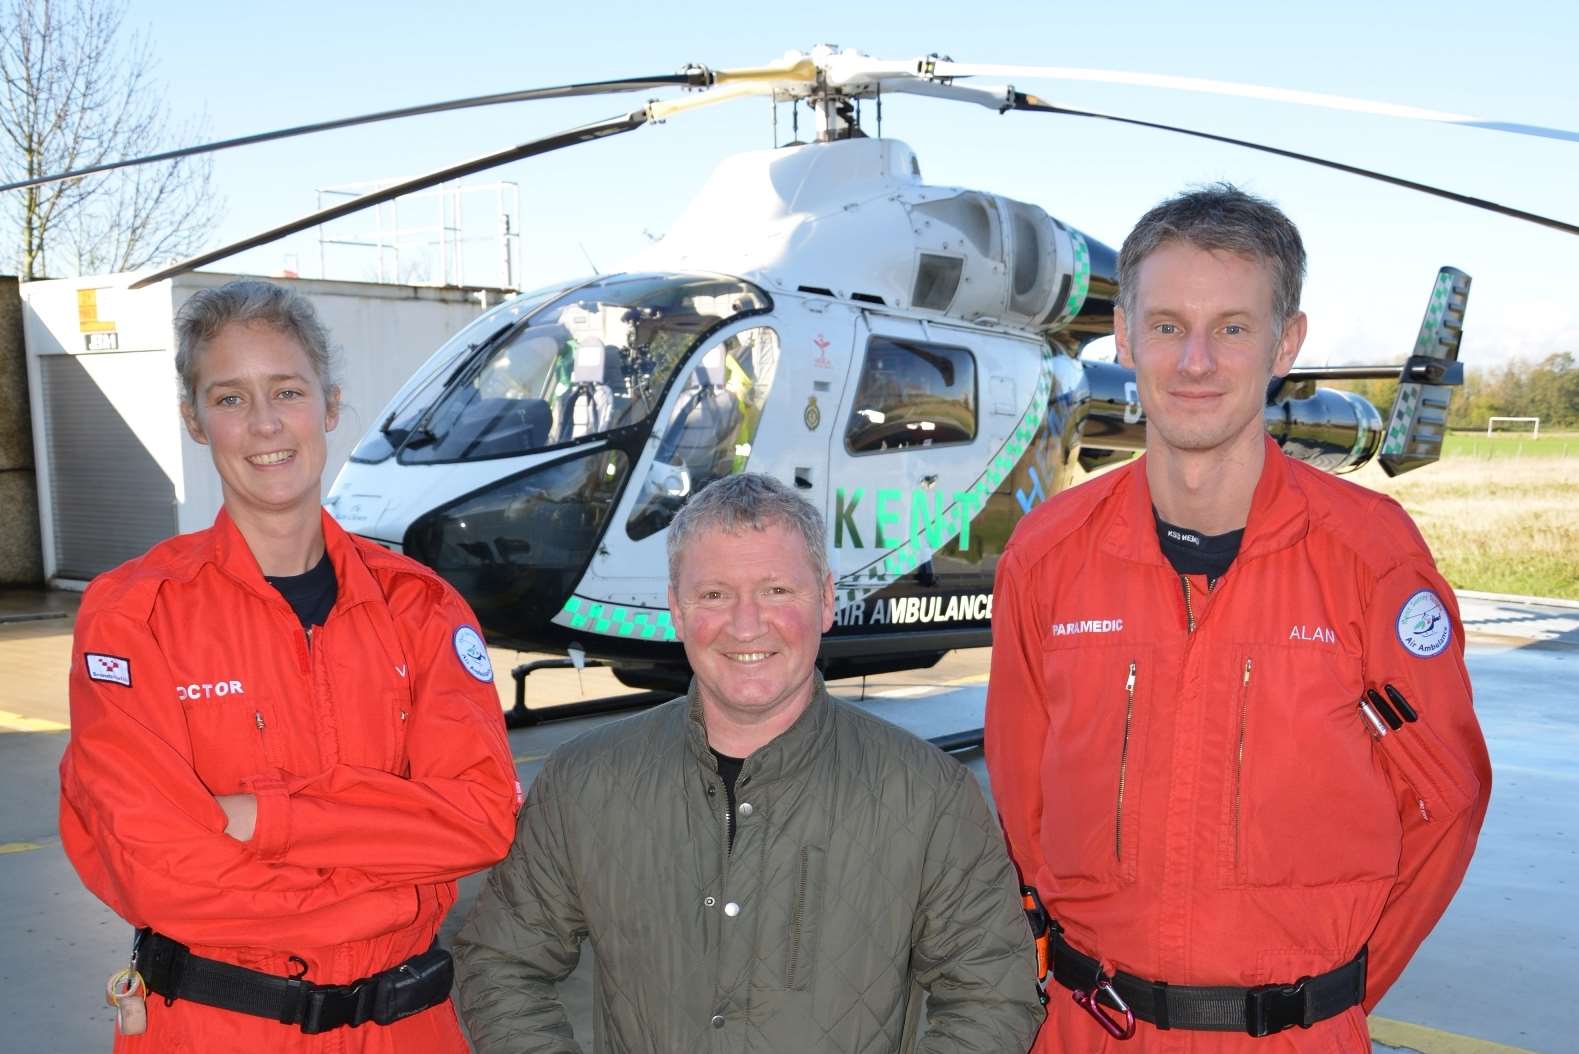 Dr Leonieke Vlaanderen with Pete Phillips and paramedic Alan Cowley